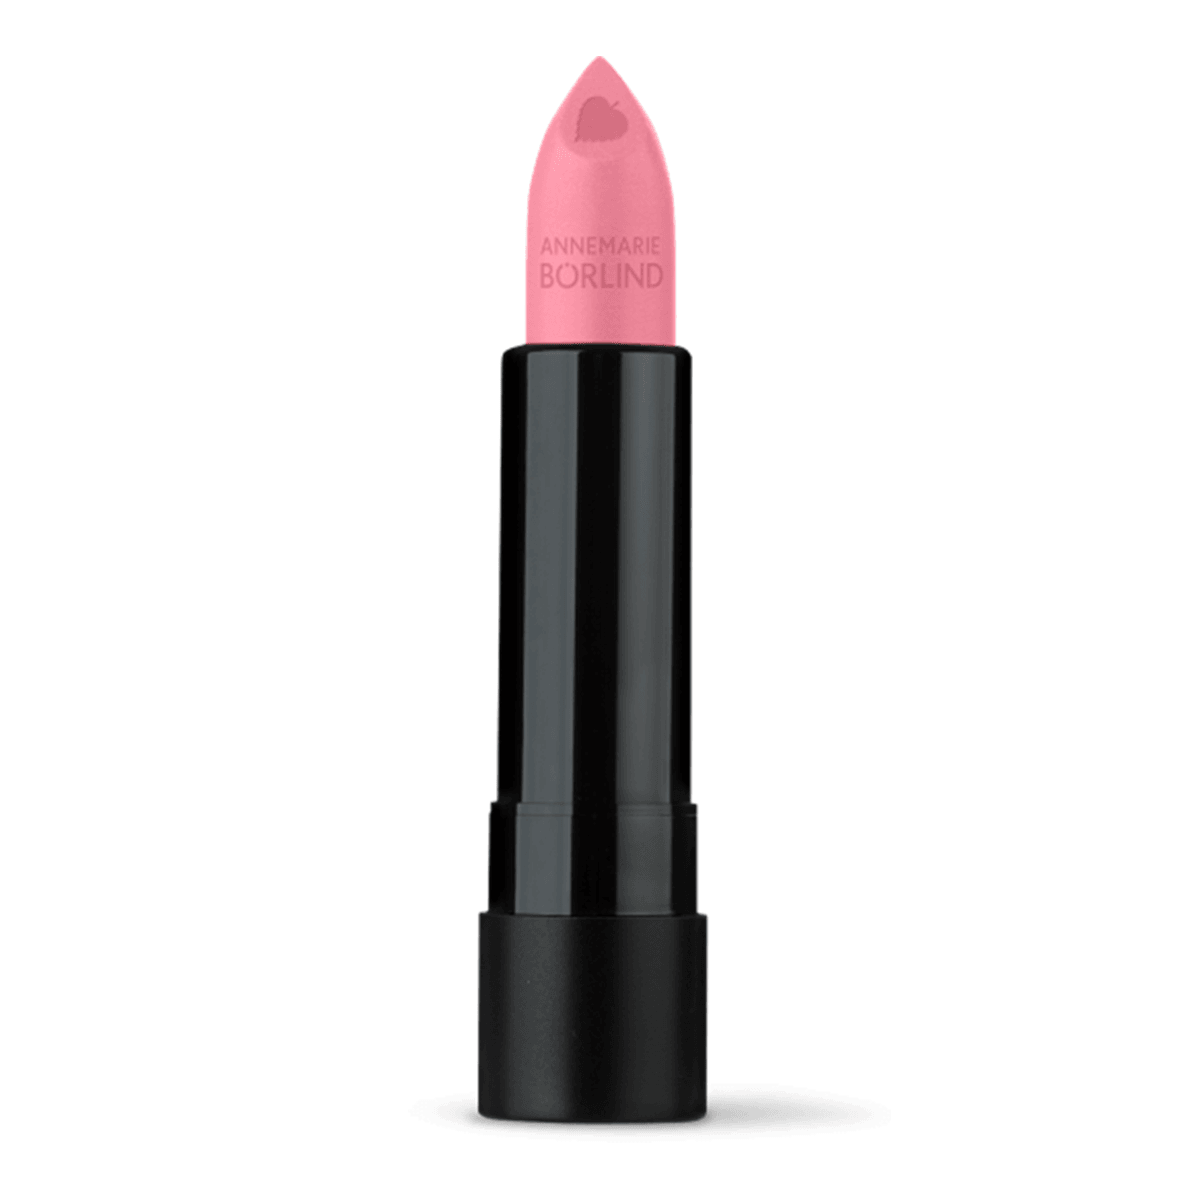 Annemarie Borlind Lipstick Ice Rose 4.2g Cosmetics - Lip Makeup at Village Vitamin Store